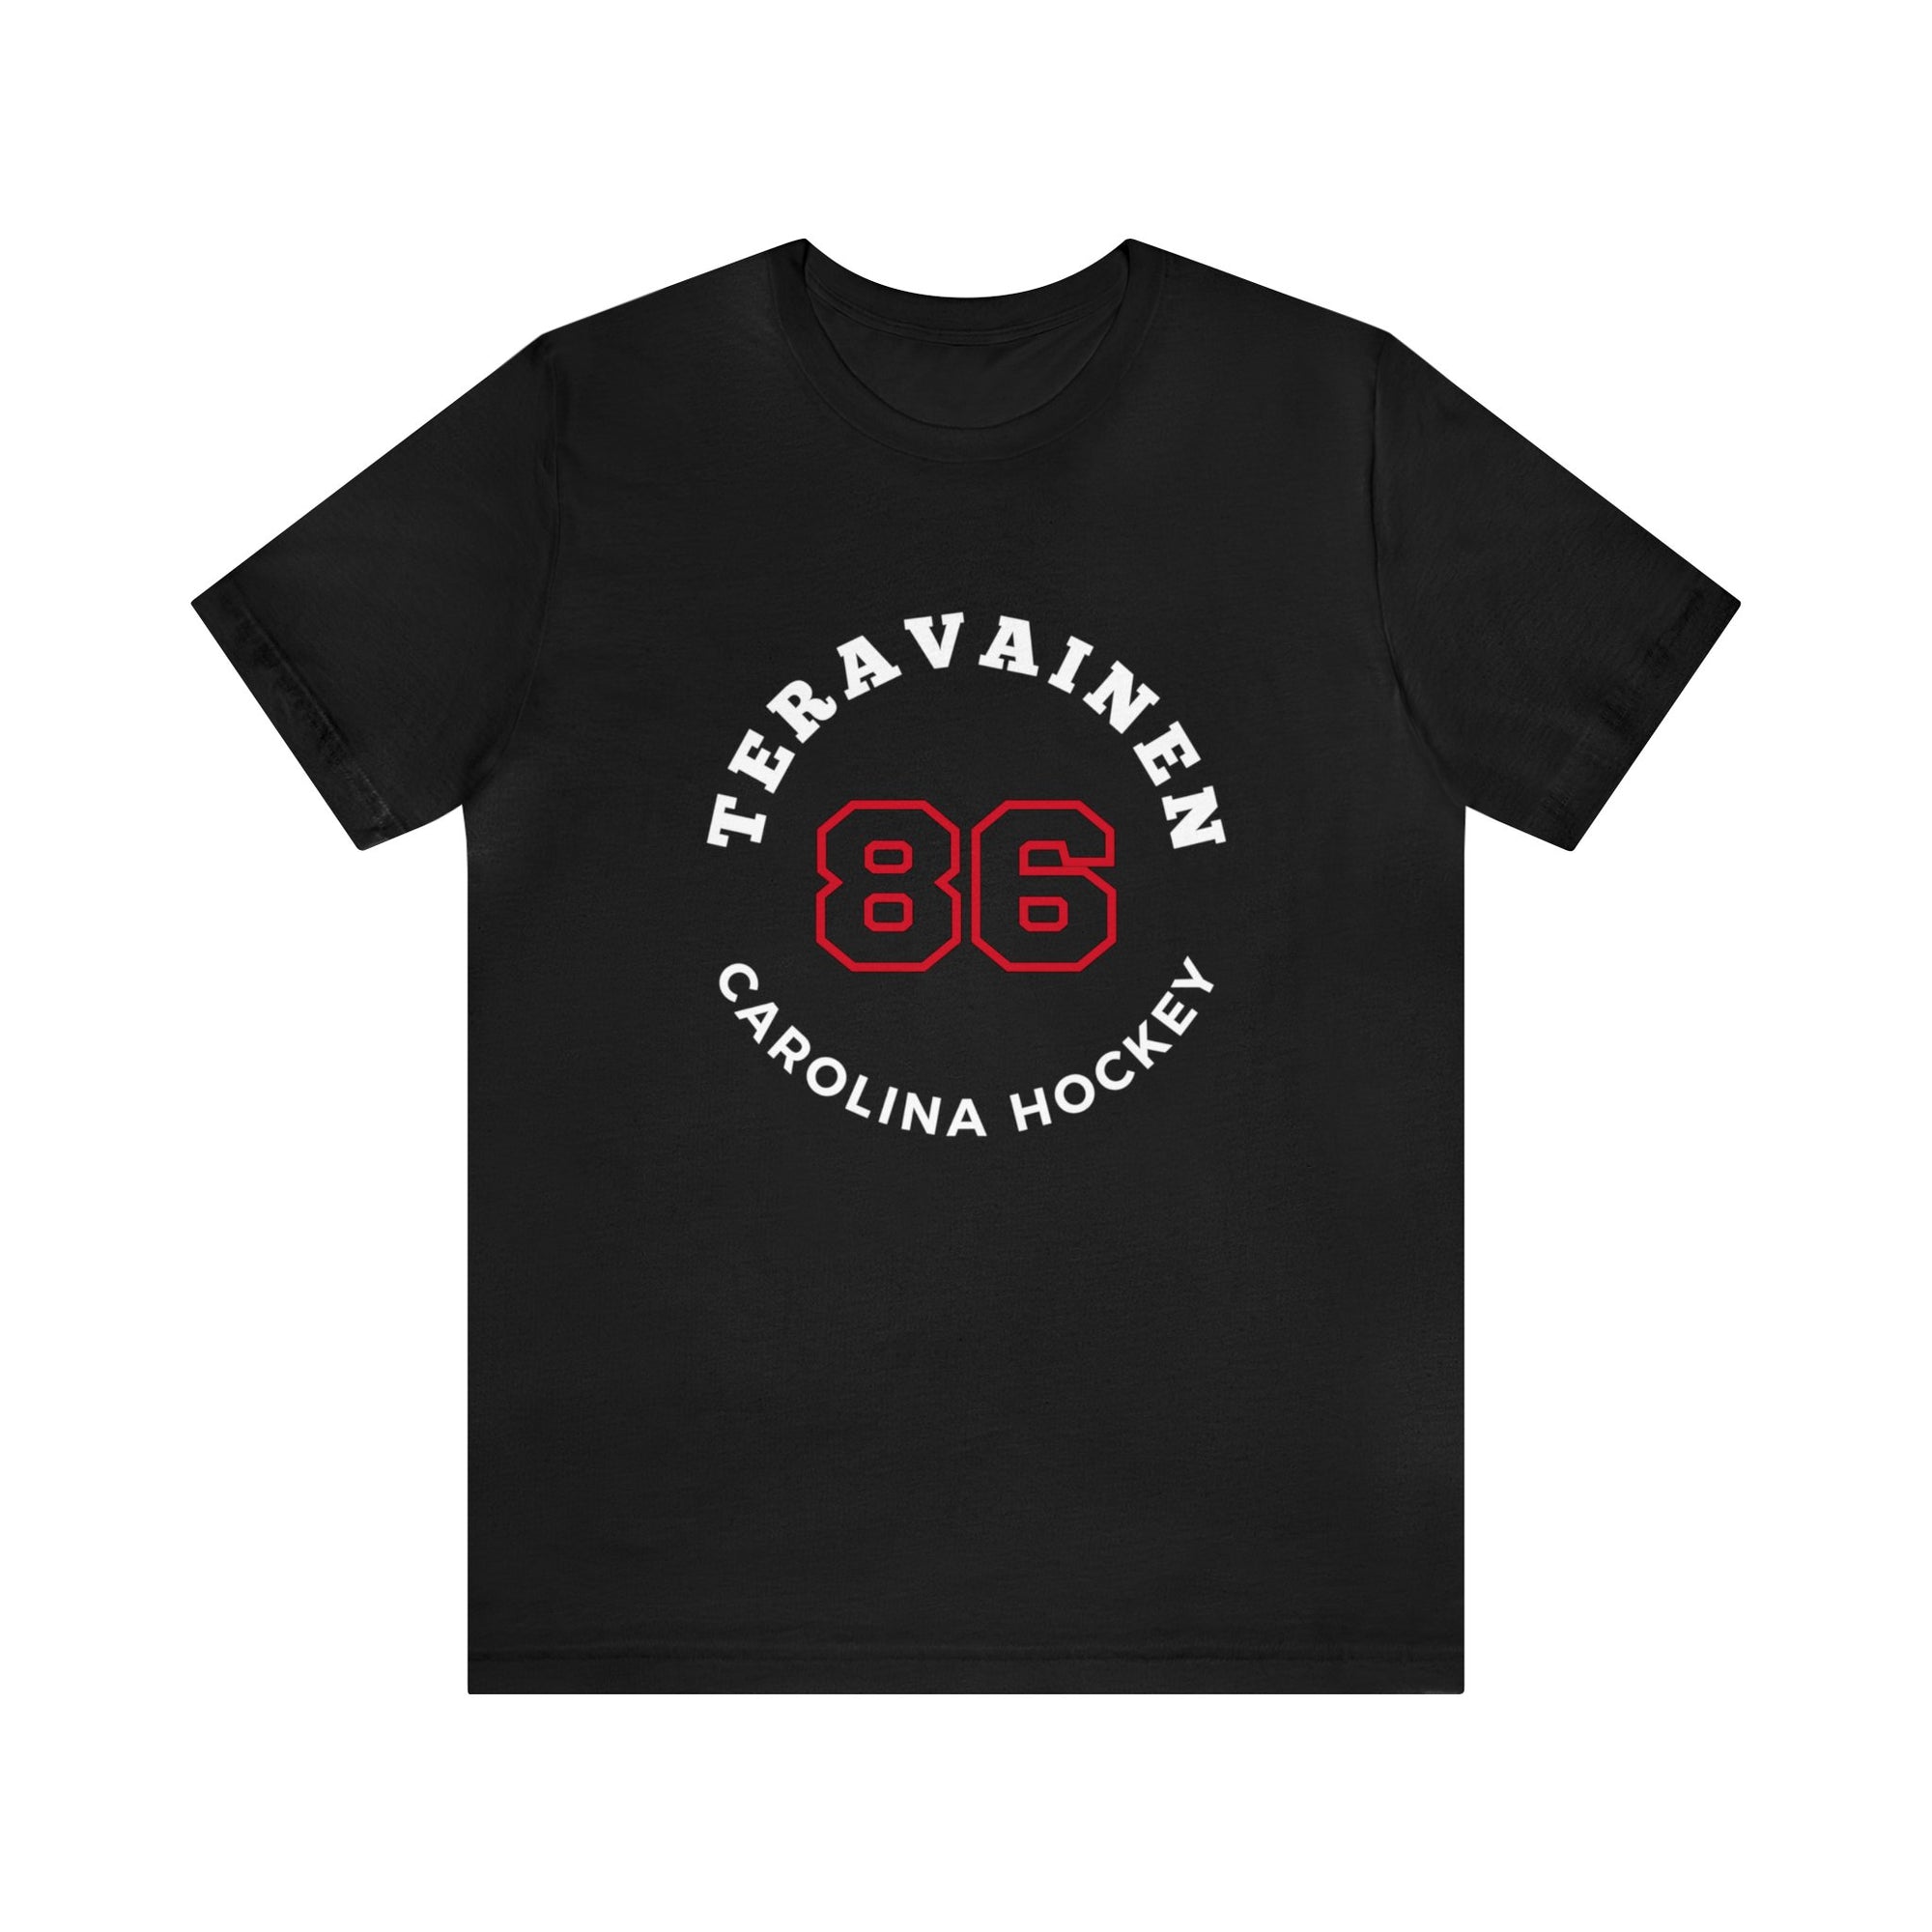 Teravainen 86 Carolina Hockey Number Arch Design Unisex T-Shirt